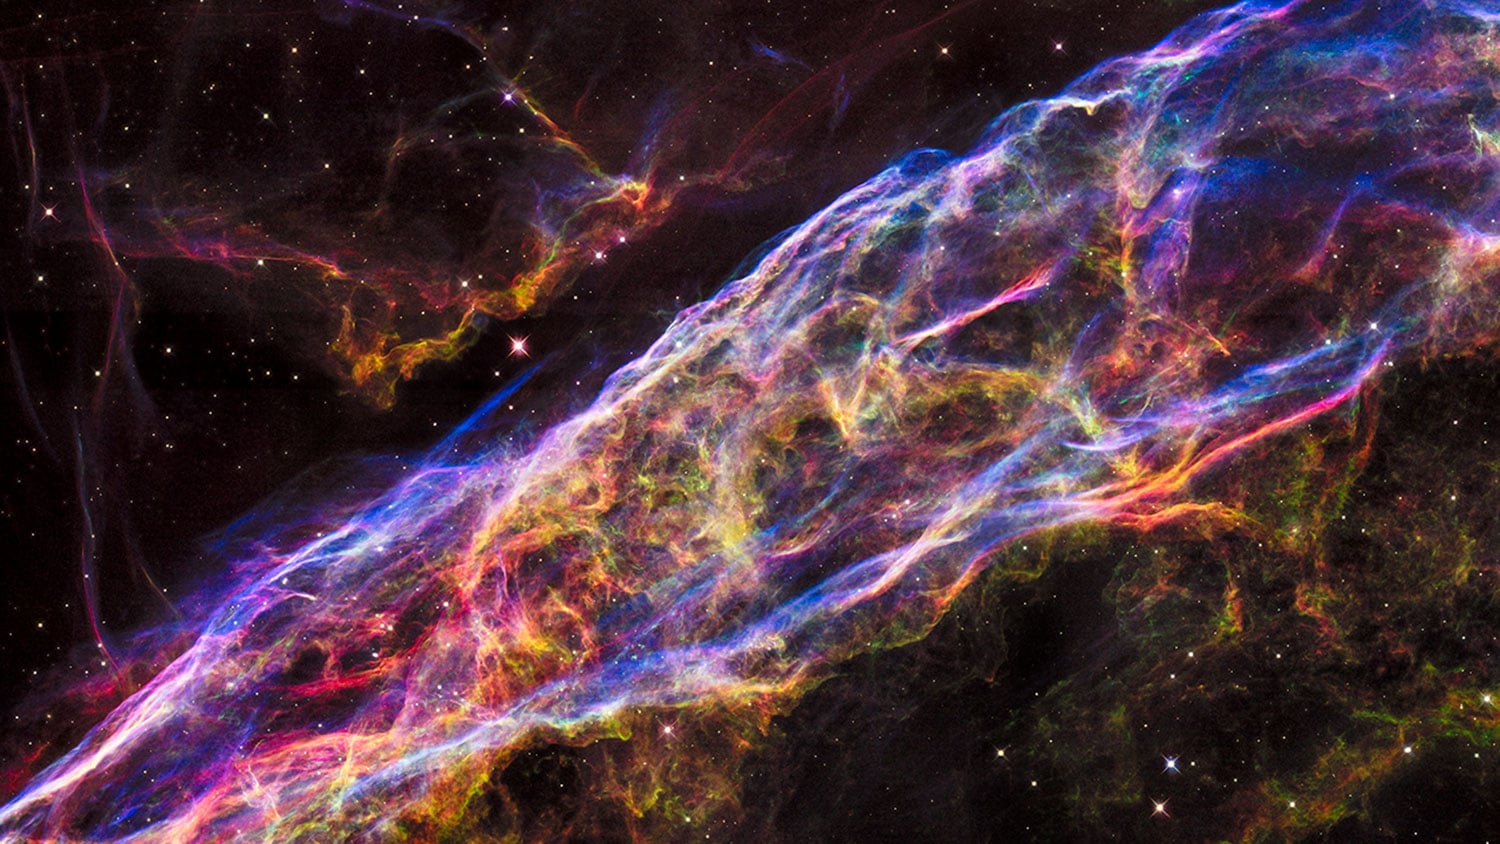 supernova image from NASA